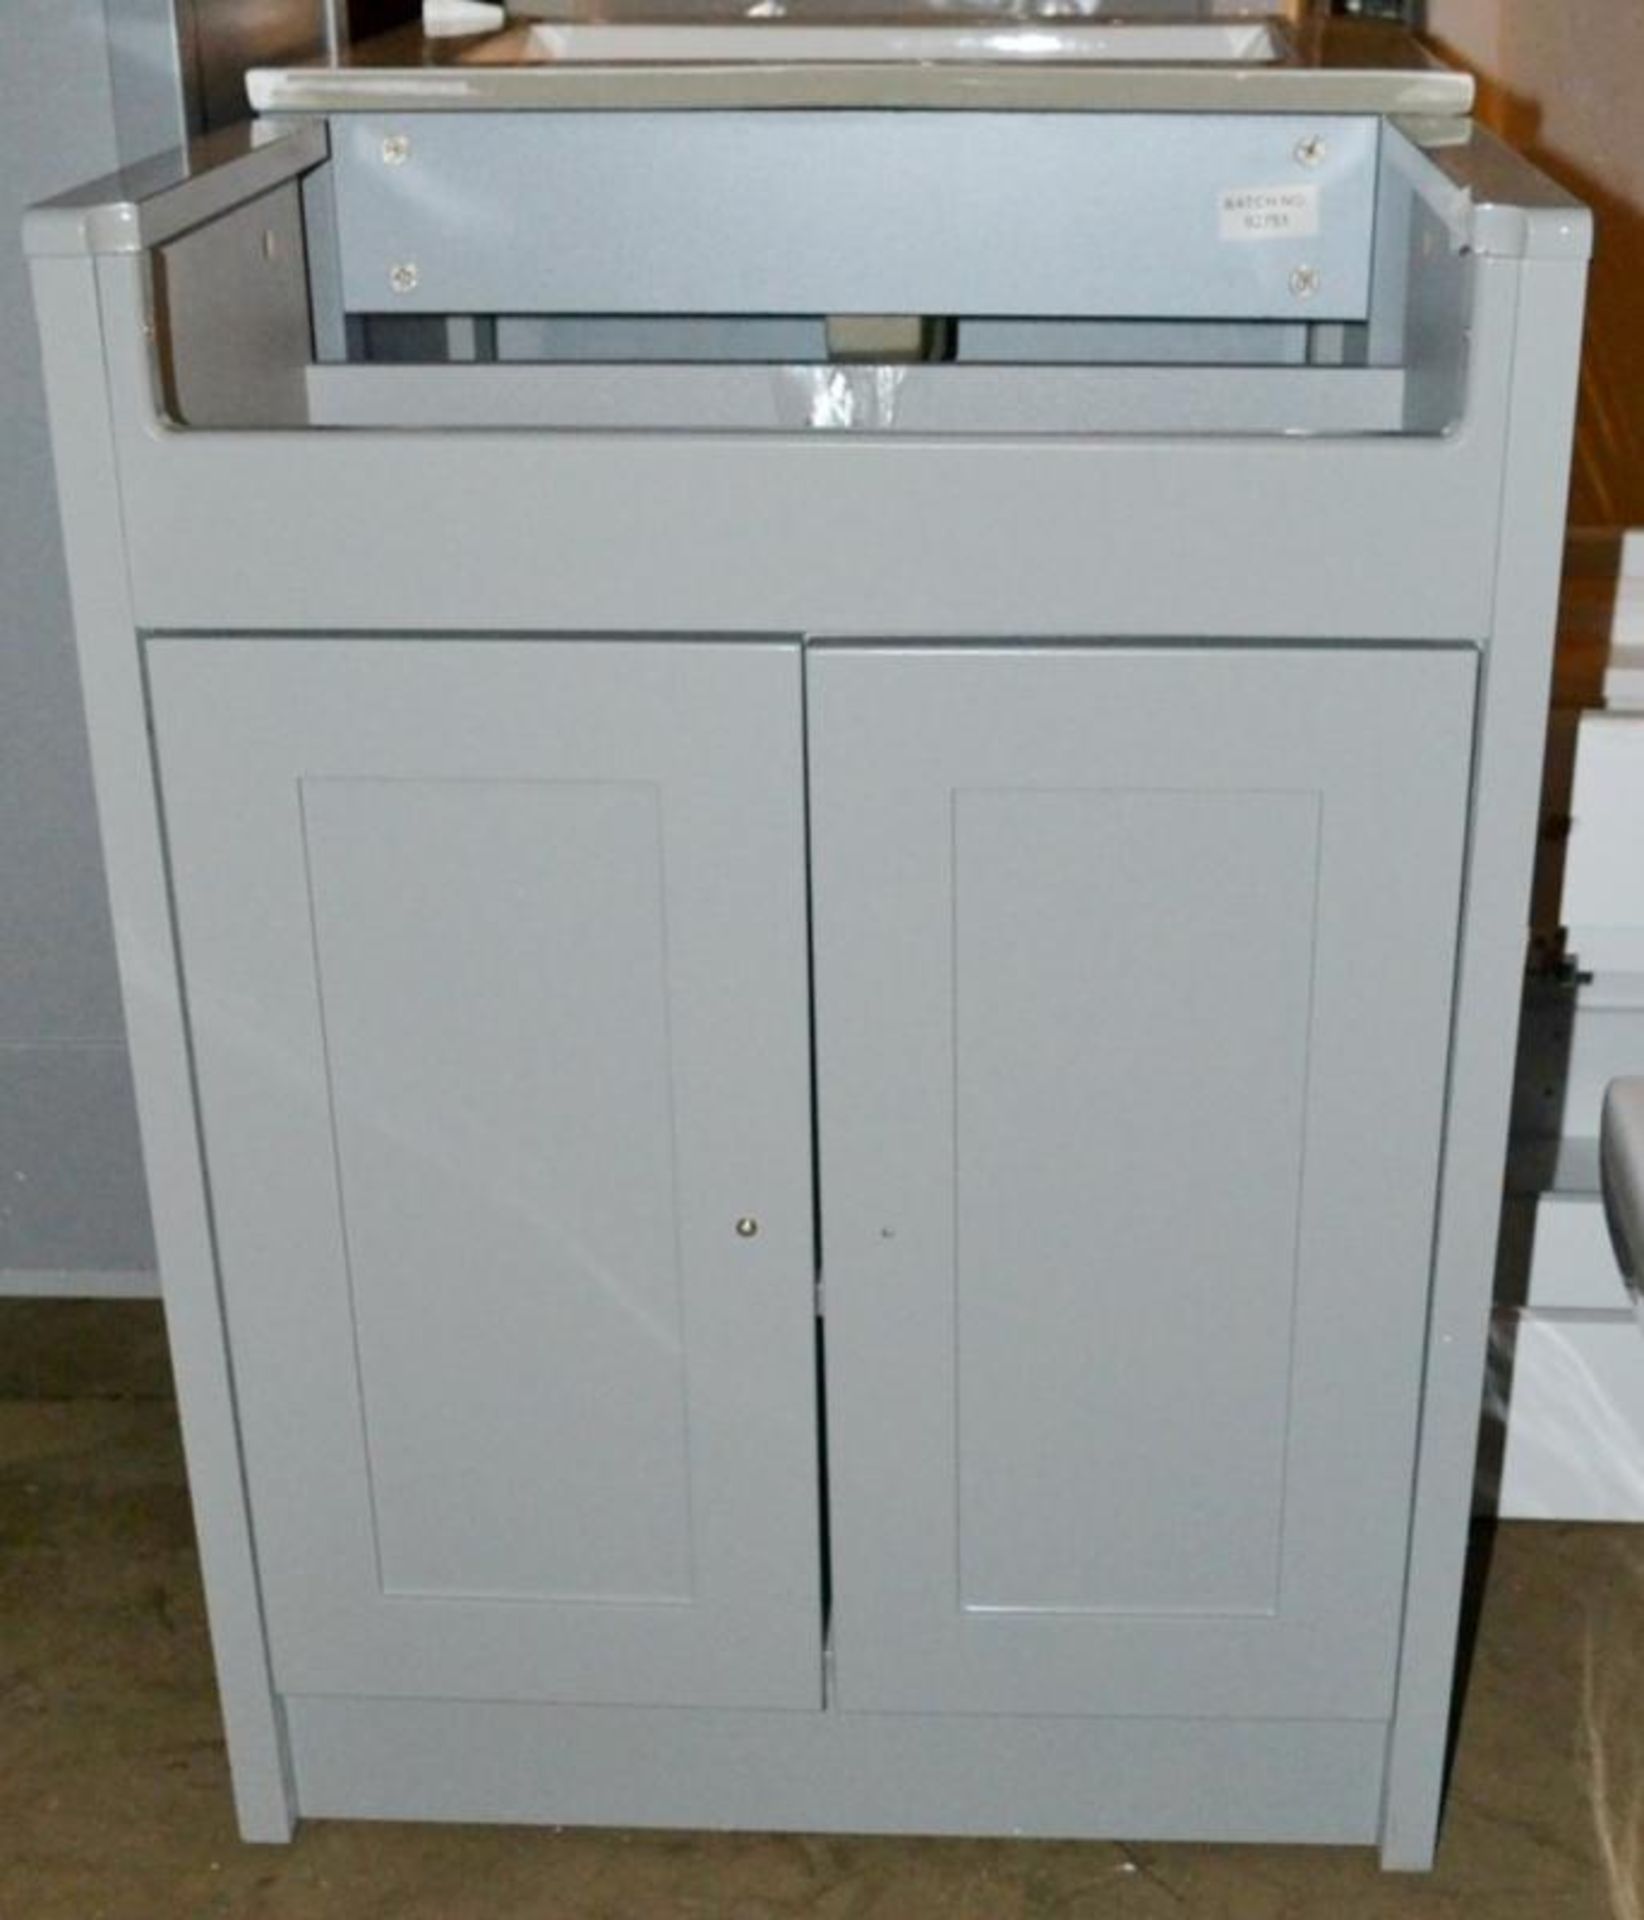 1 x Square Vanity Sink Unit With Shelf - Ex-Display Item - Ref MT884 - CL269 - Location: Bolton